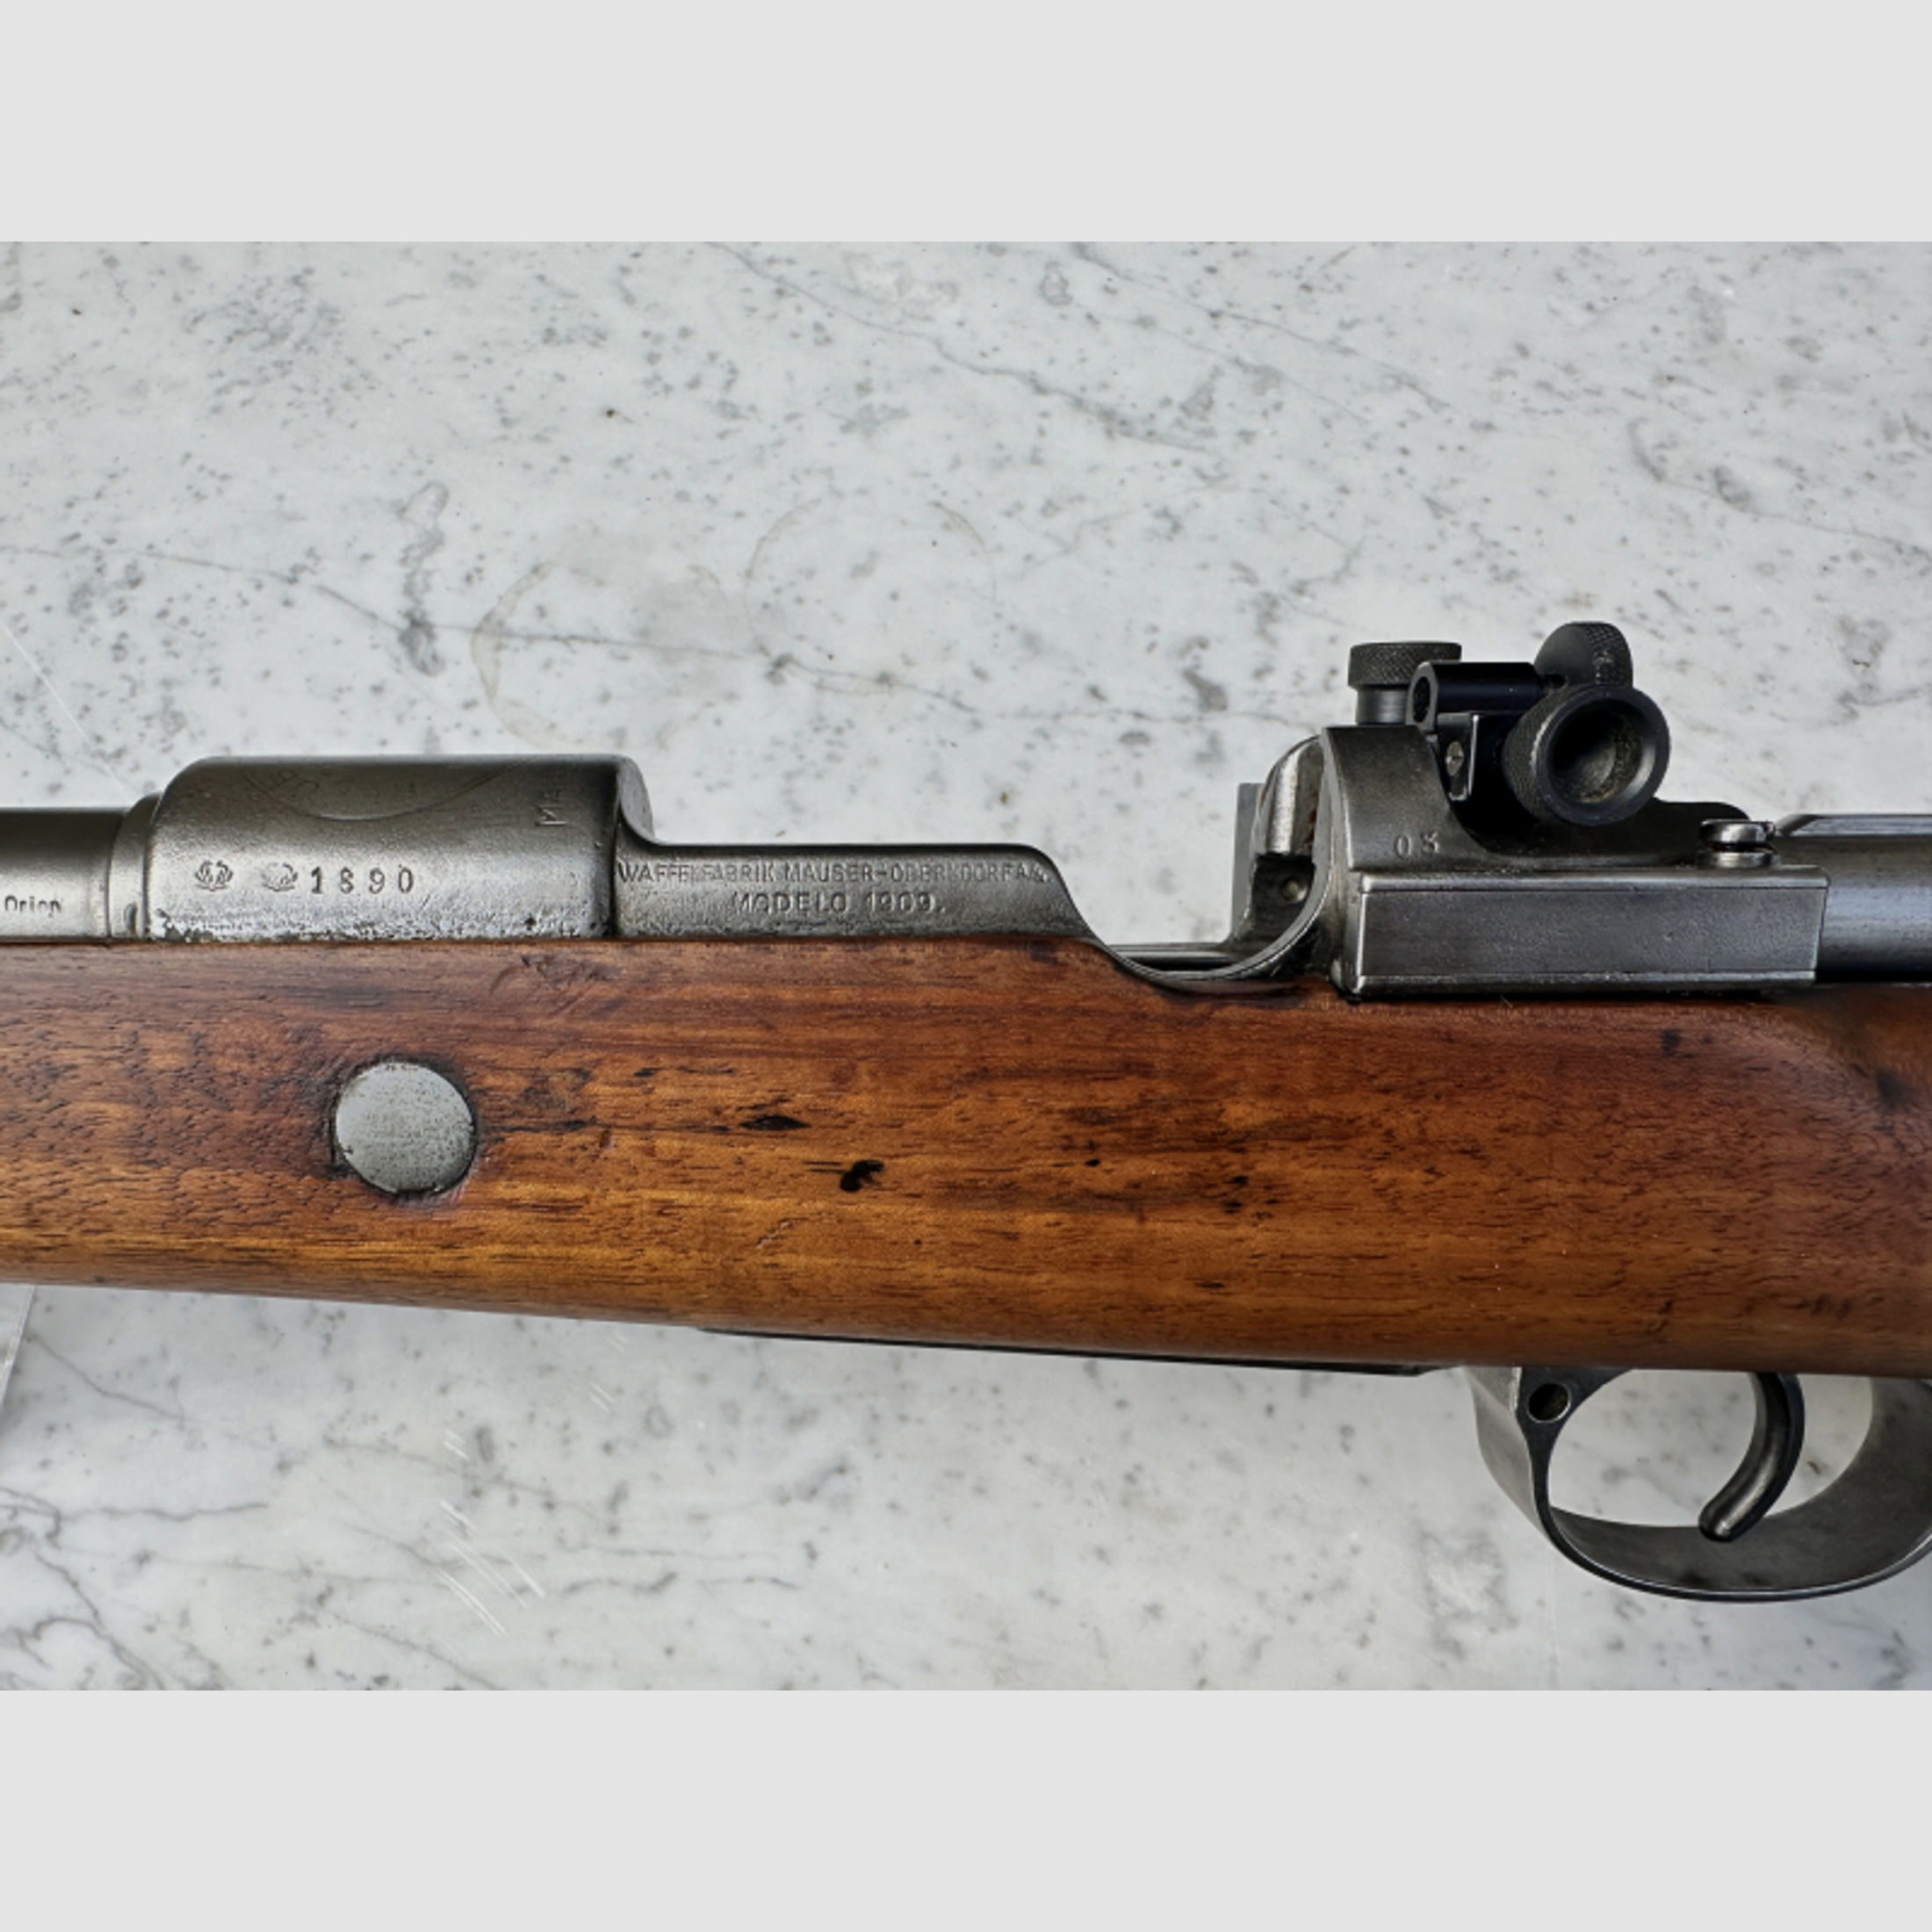 K98 Mauser